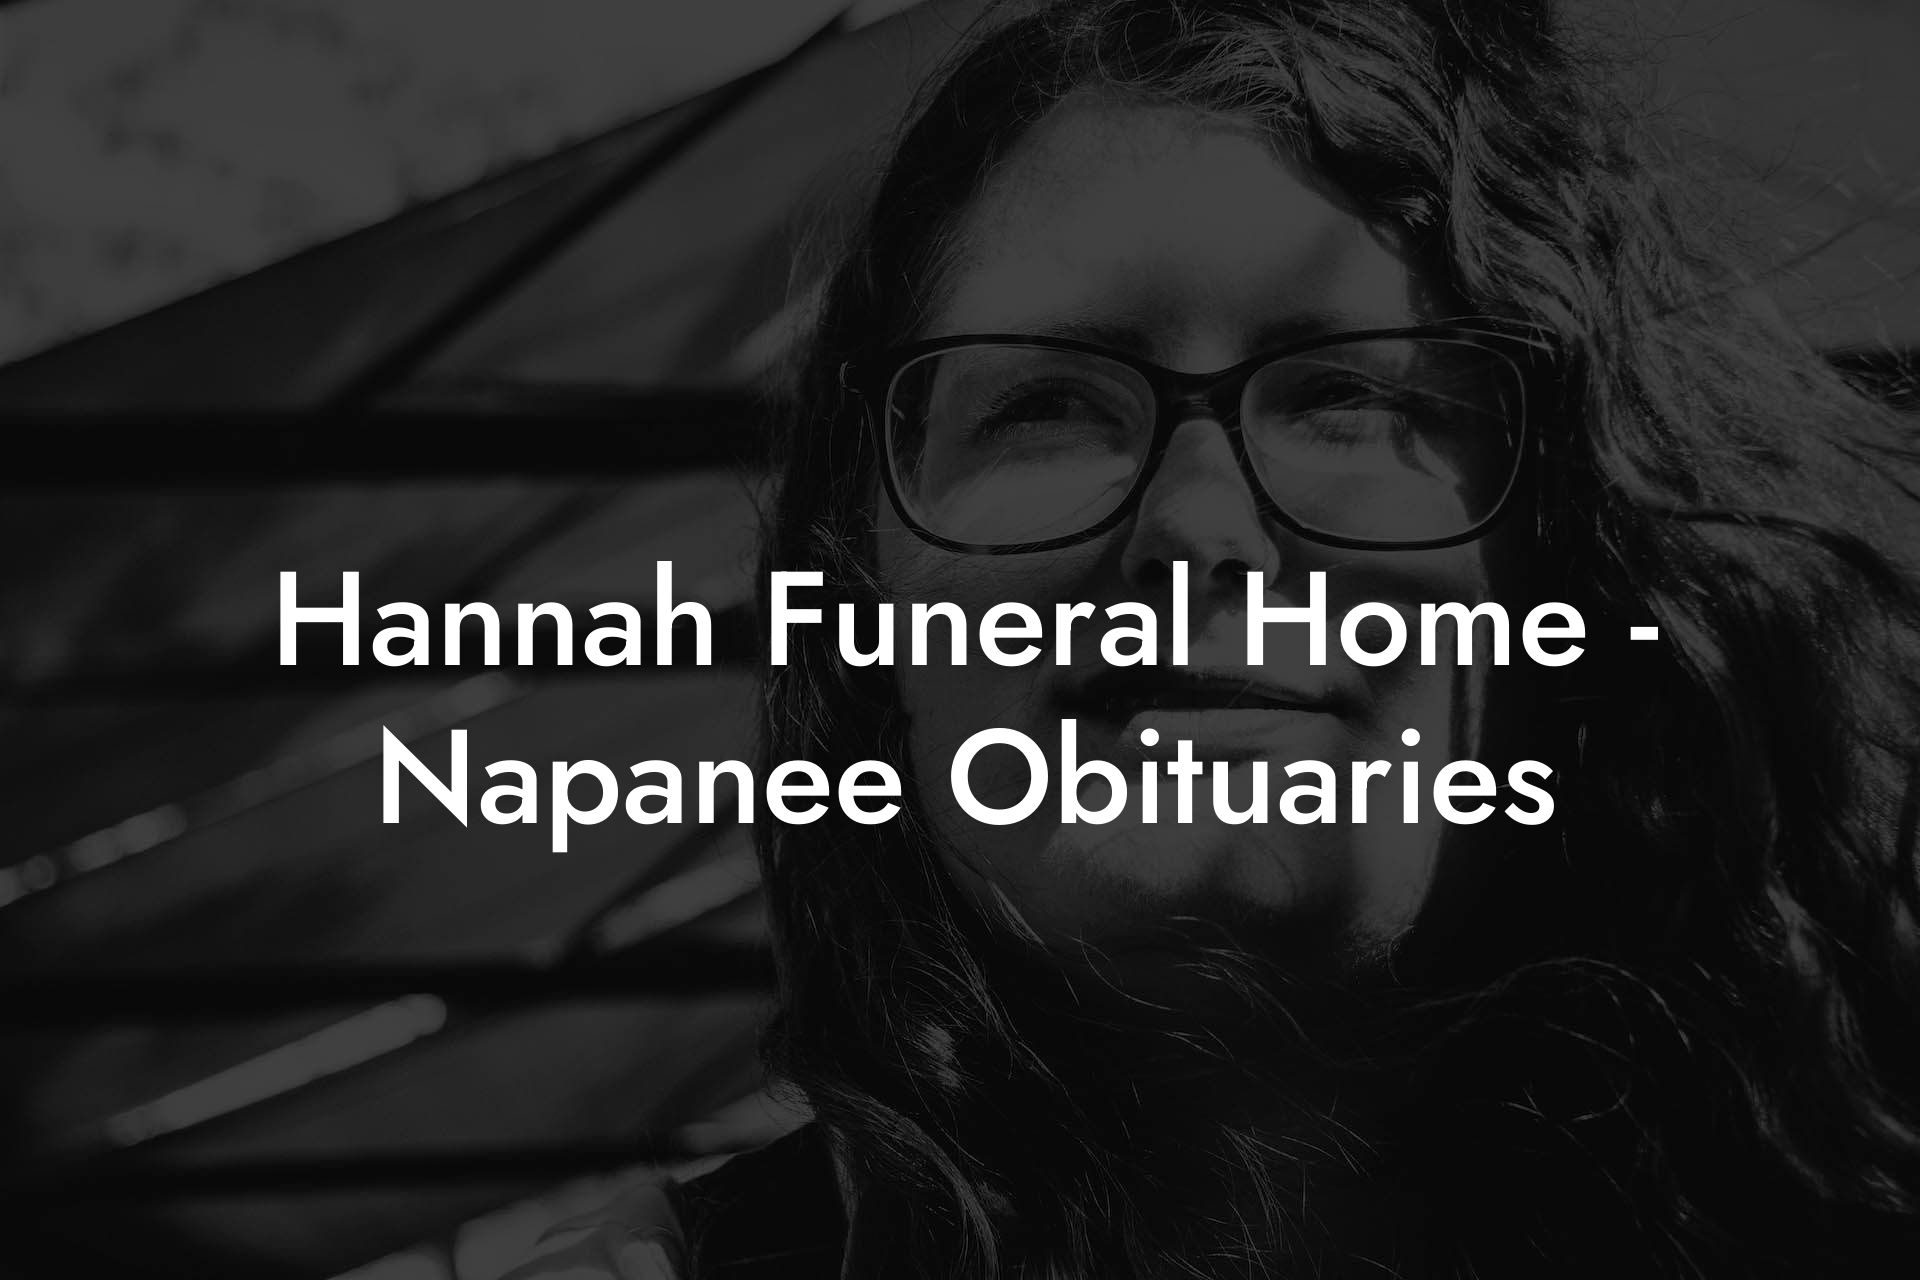 Hannah Funeral Home - Napanee Obituaries